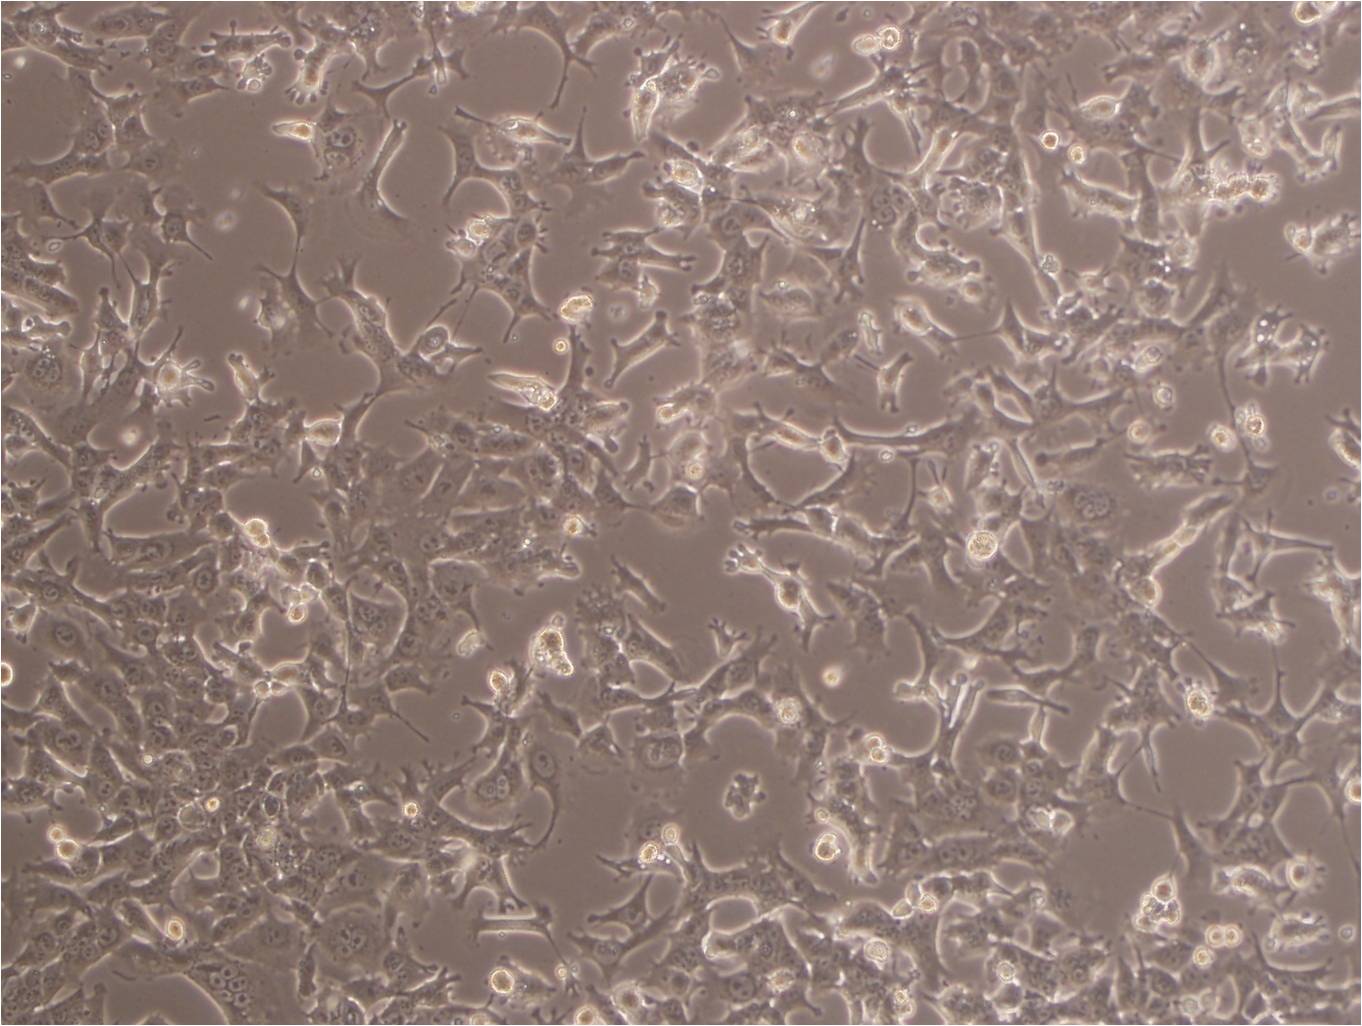 SCLC-21H epithelioid cells人小细胞肺癌细胞系